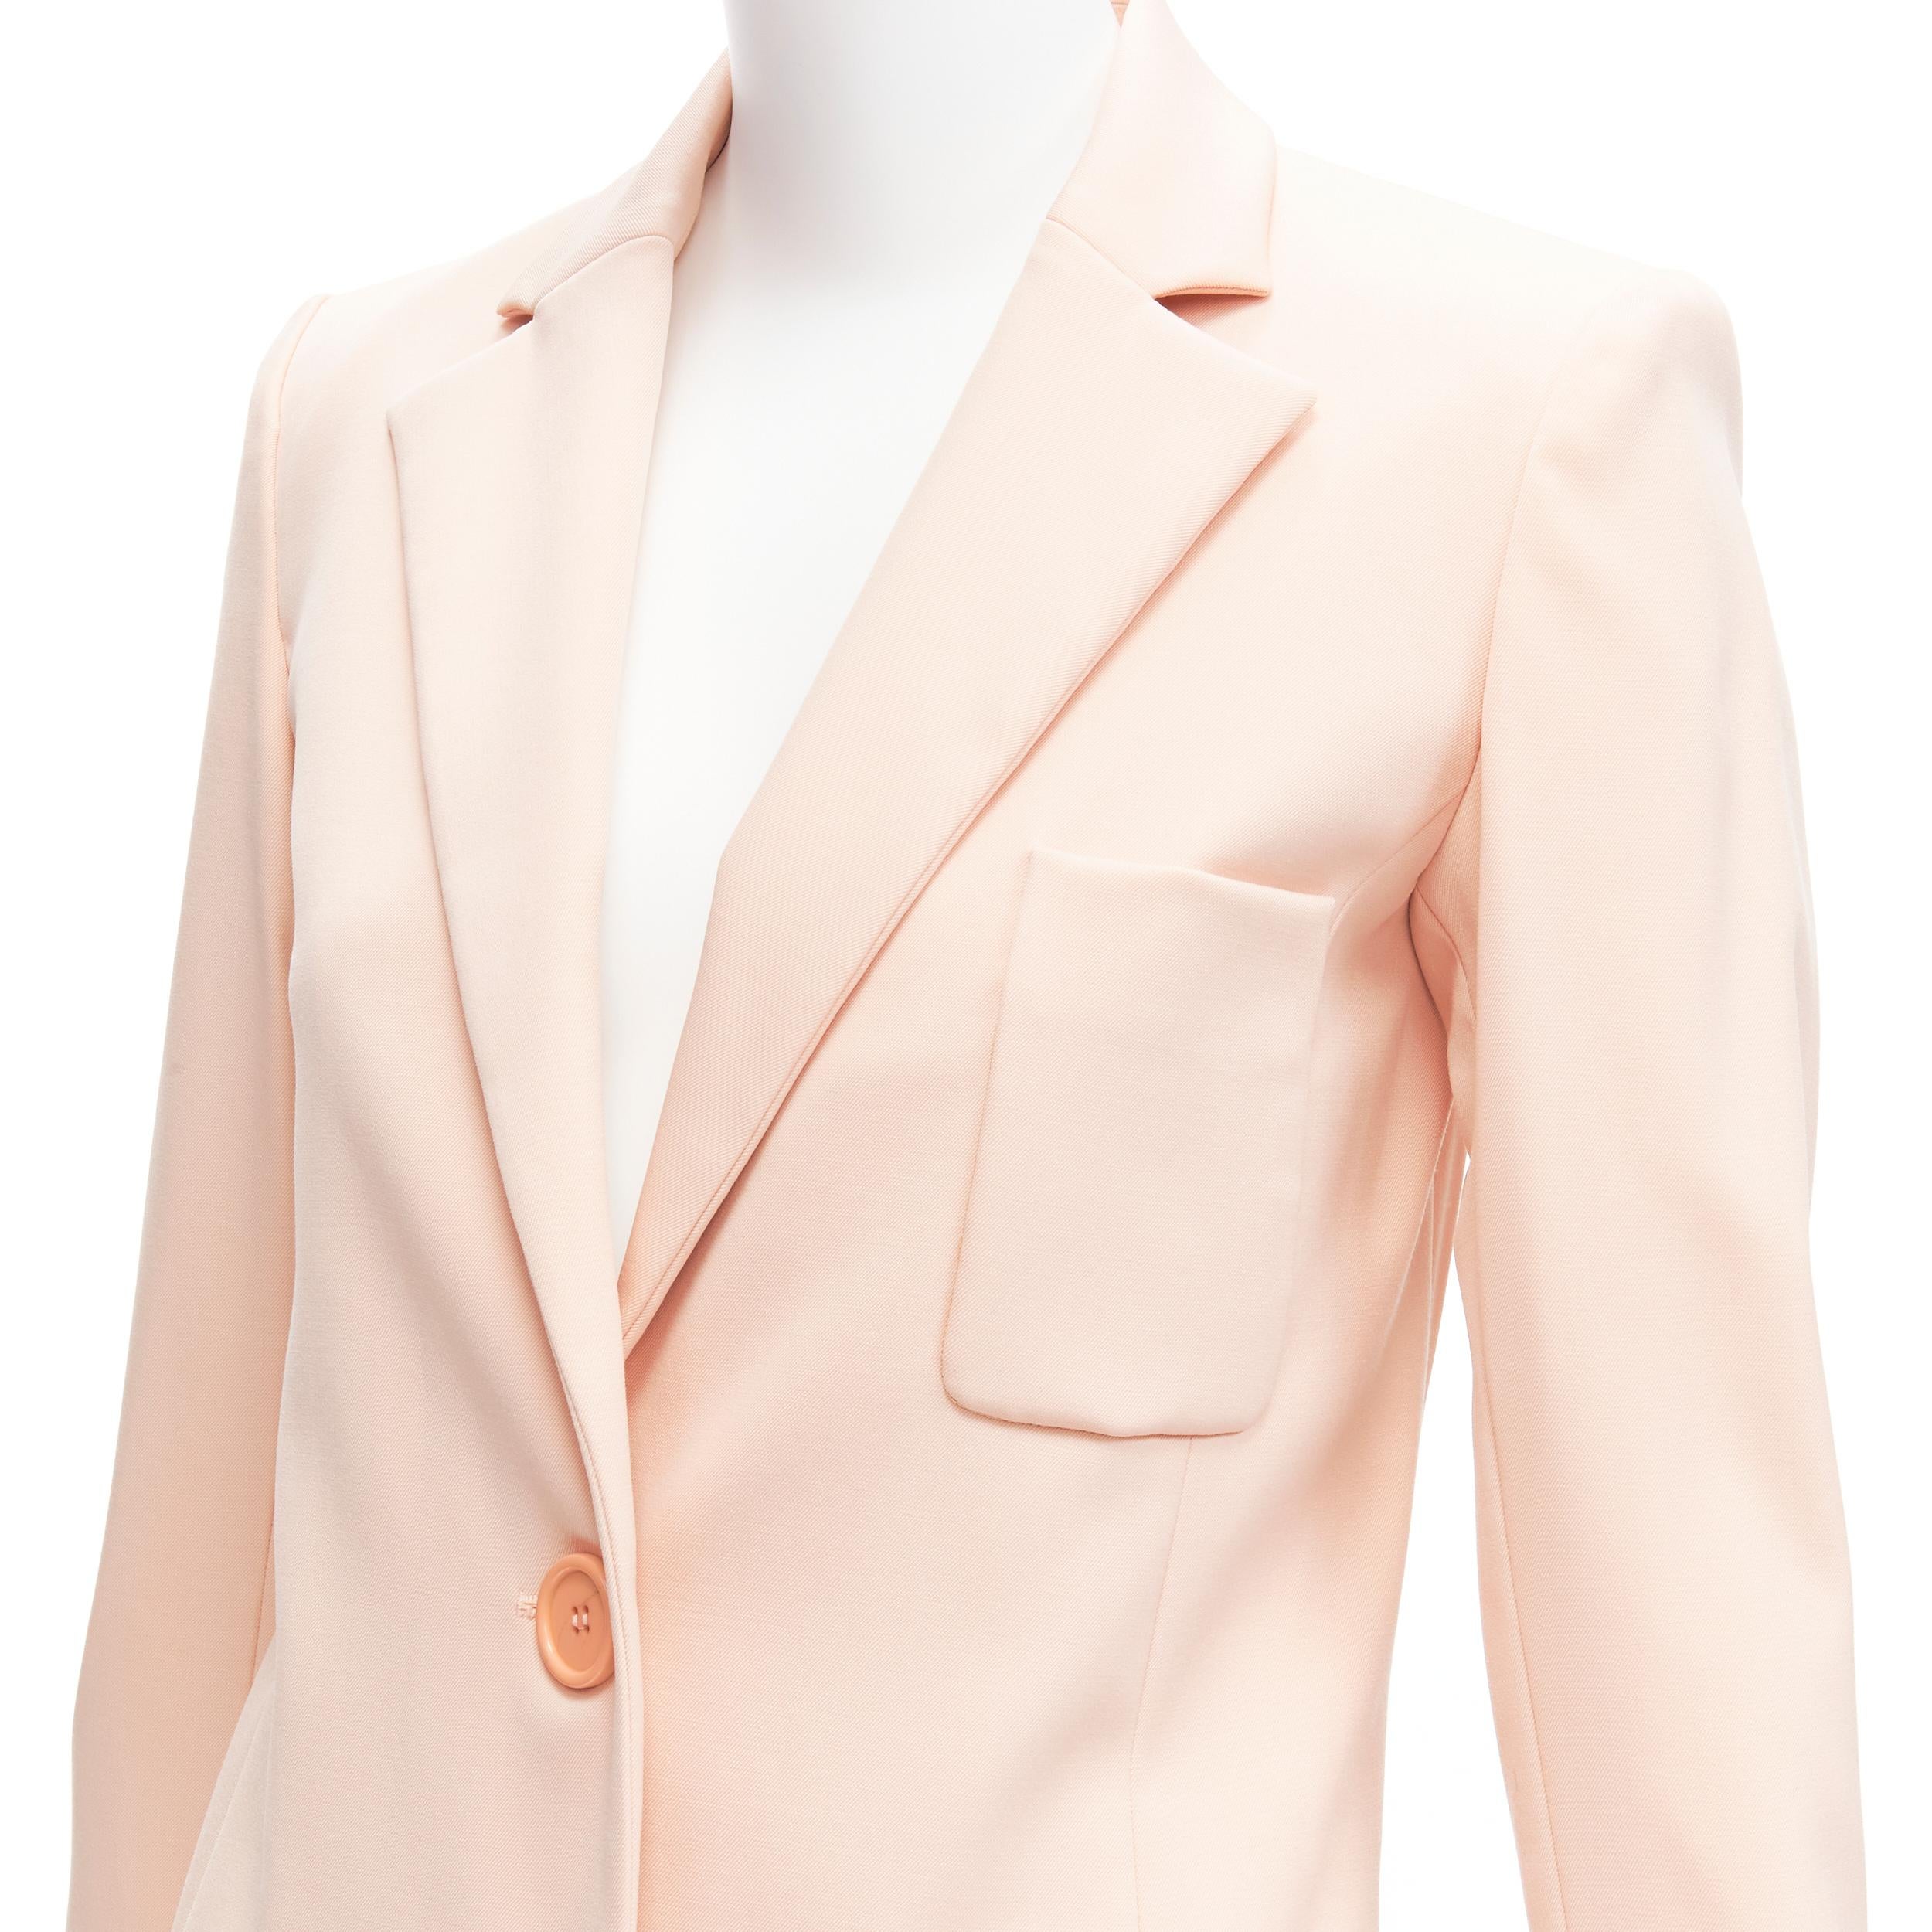 OSCAR DE LA RENTA 2018 blush pink virgin wool 3 pocket longline blazer jacket US0 XS
Reference: LNKO/A02116
Brand: Oscar De La Renta
Collection: 2018
Material: Virgin Wool, Blend
Color: Pink
Pattern: Solid
Closure: Button
Lining: Nude Fabric
Made